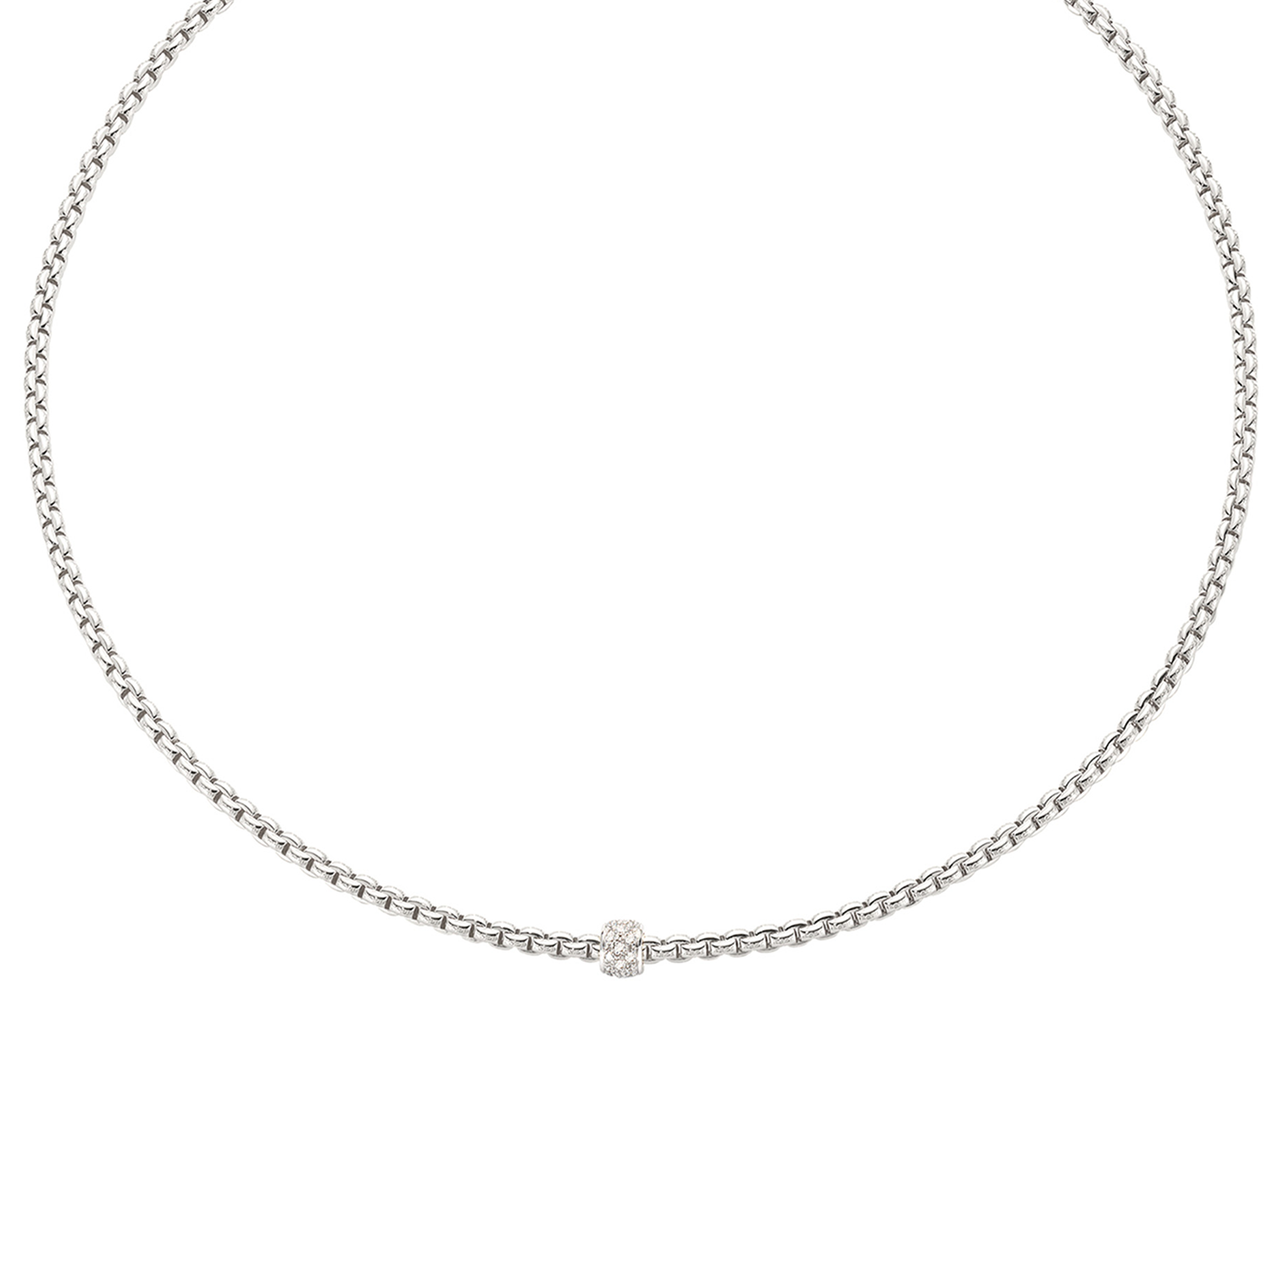 Eka White Gold Necklace with Diamonds | Fope